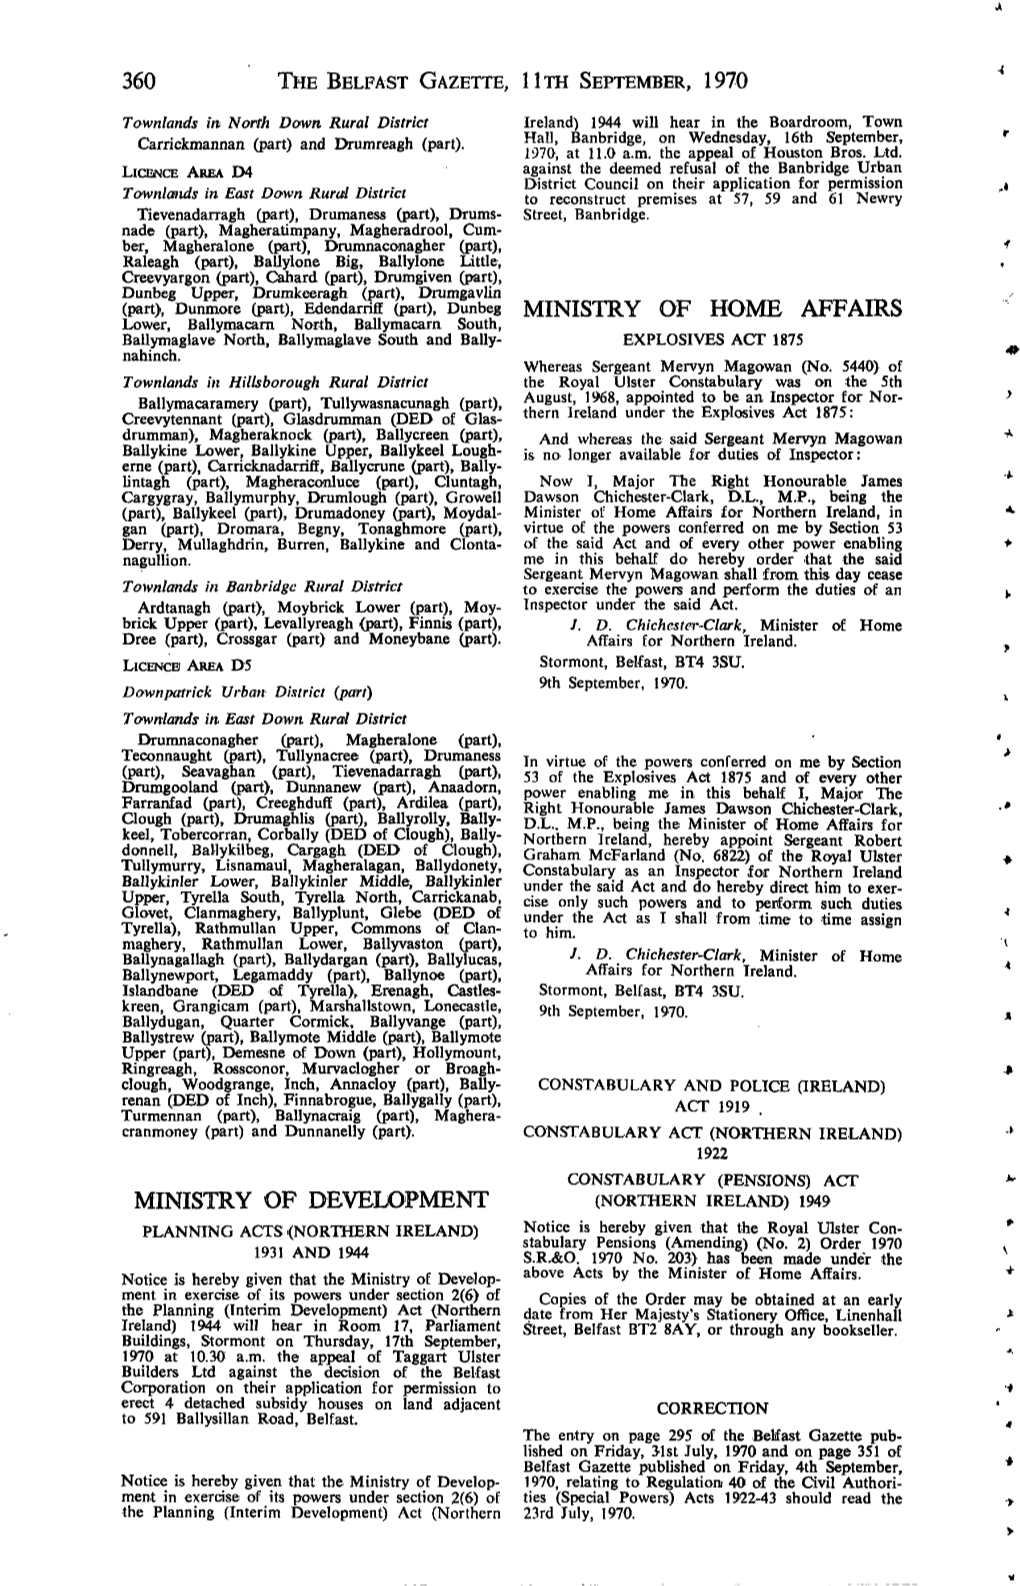 The Belfast Gazette, Hth September, 1970 Ministry of Development Ministry of Home Affairs